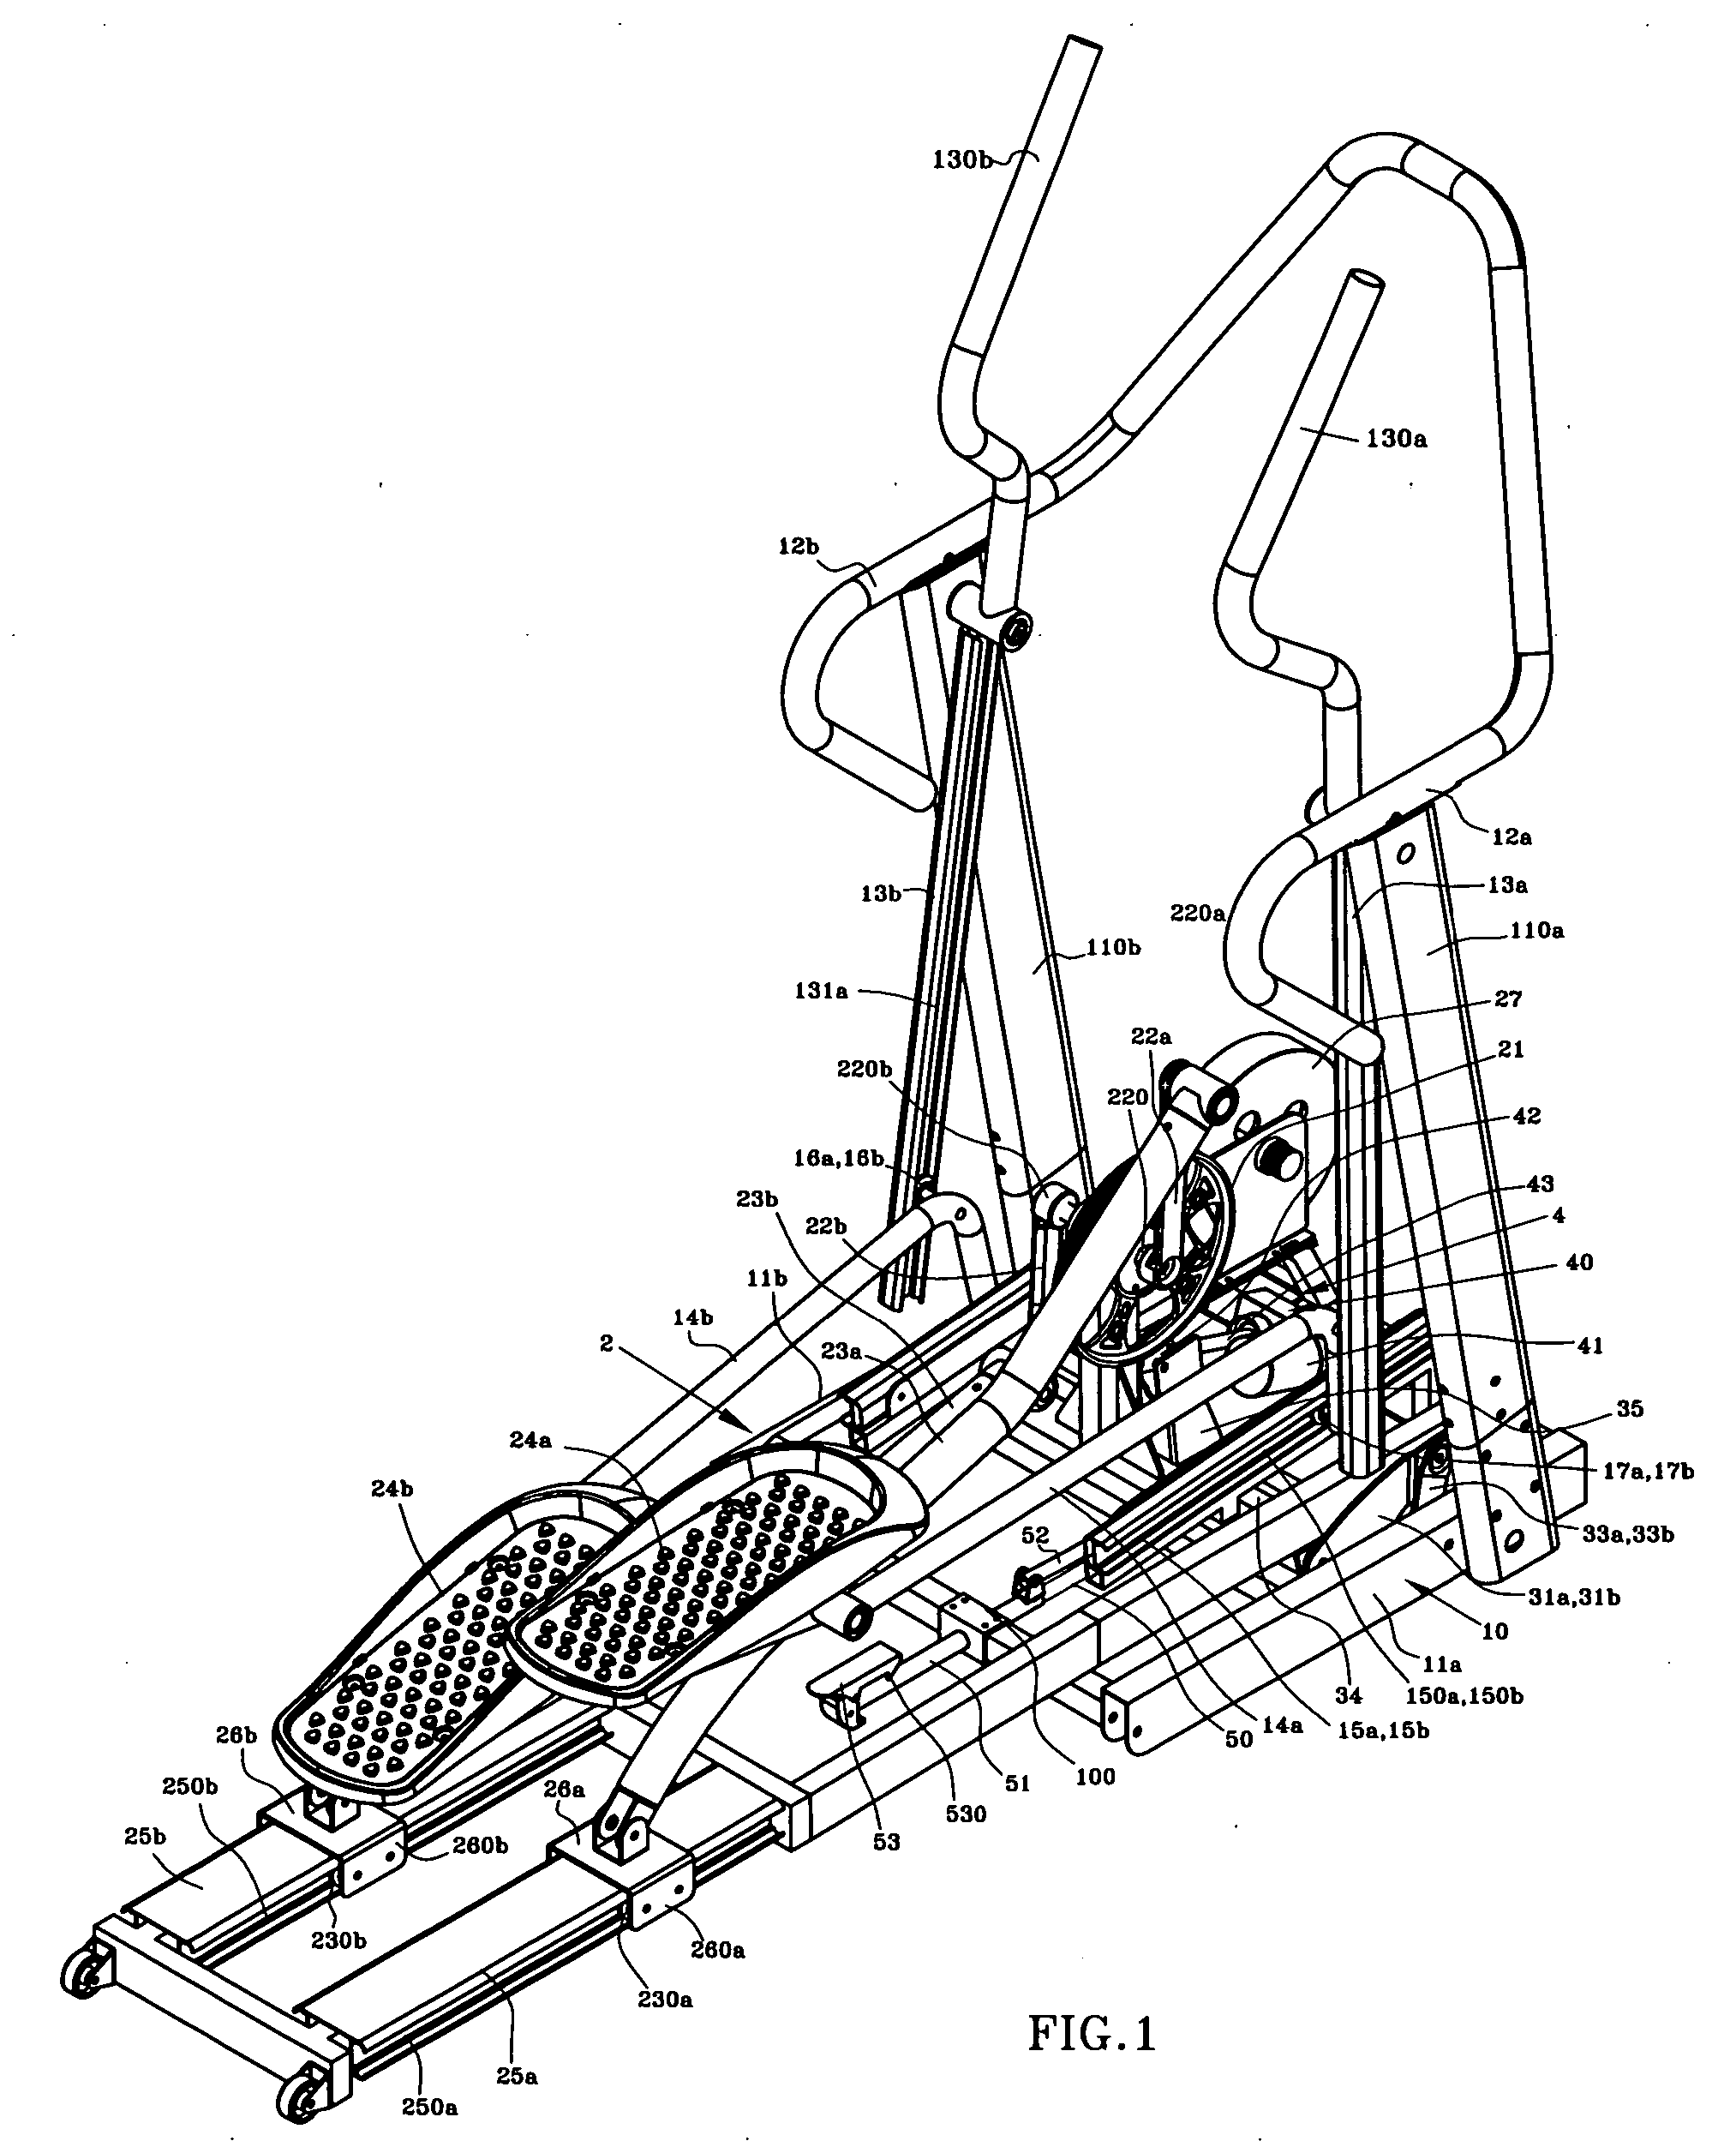 Elliptical fitness machine having incline adjusting mechanism